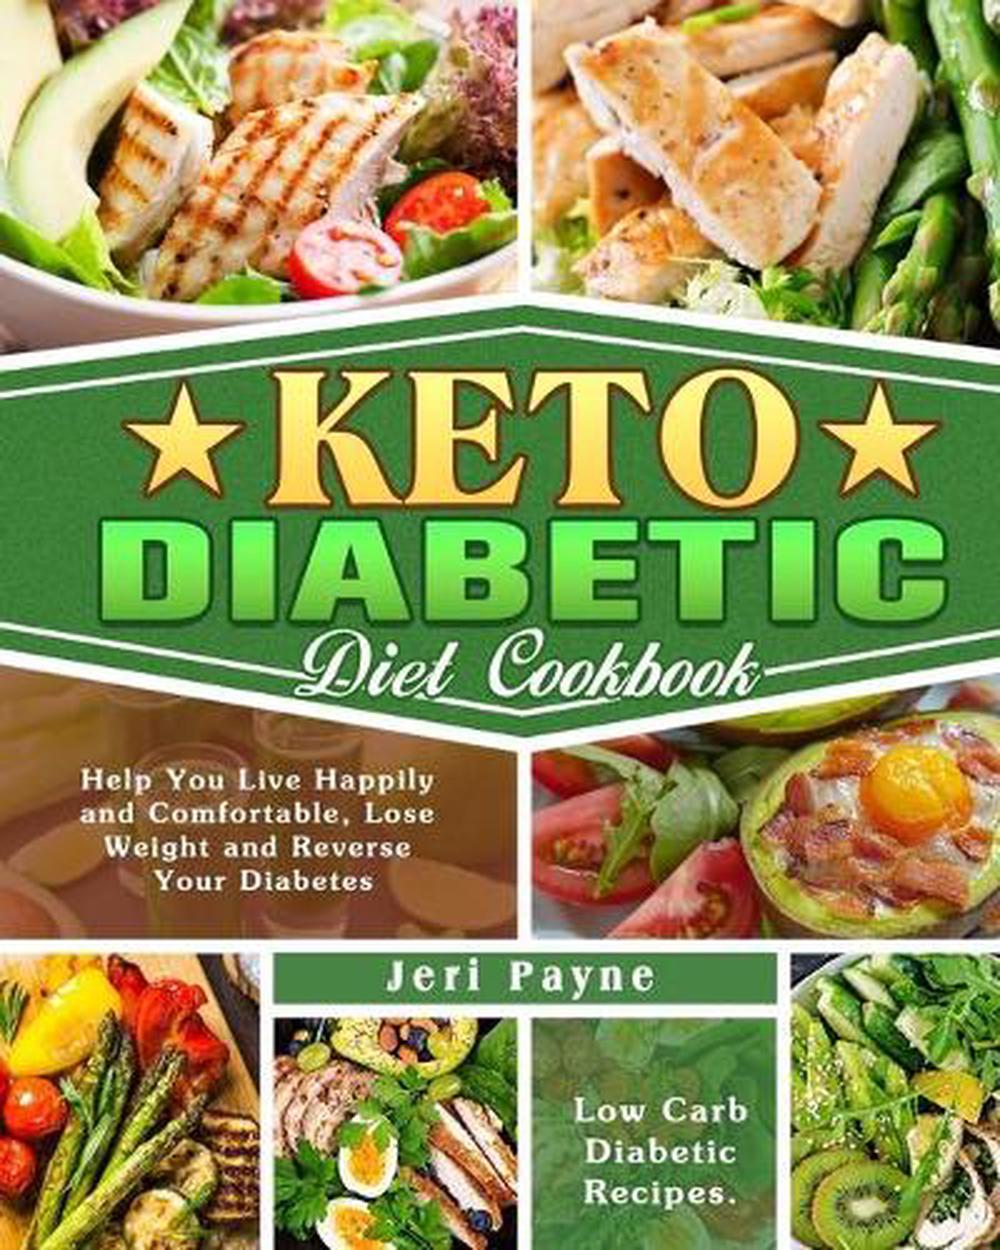 Keto Diabetic Diet Cookbook by Jeri Payne Free Shipping! 9781649843142 ...